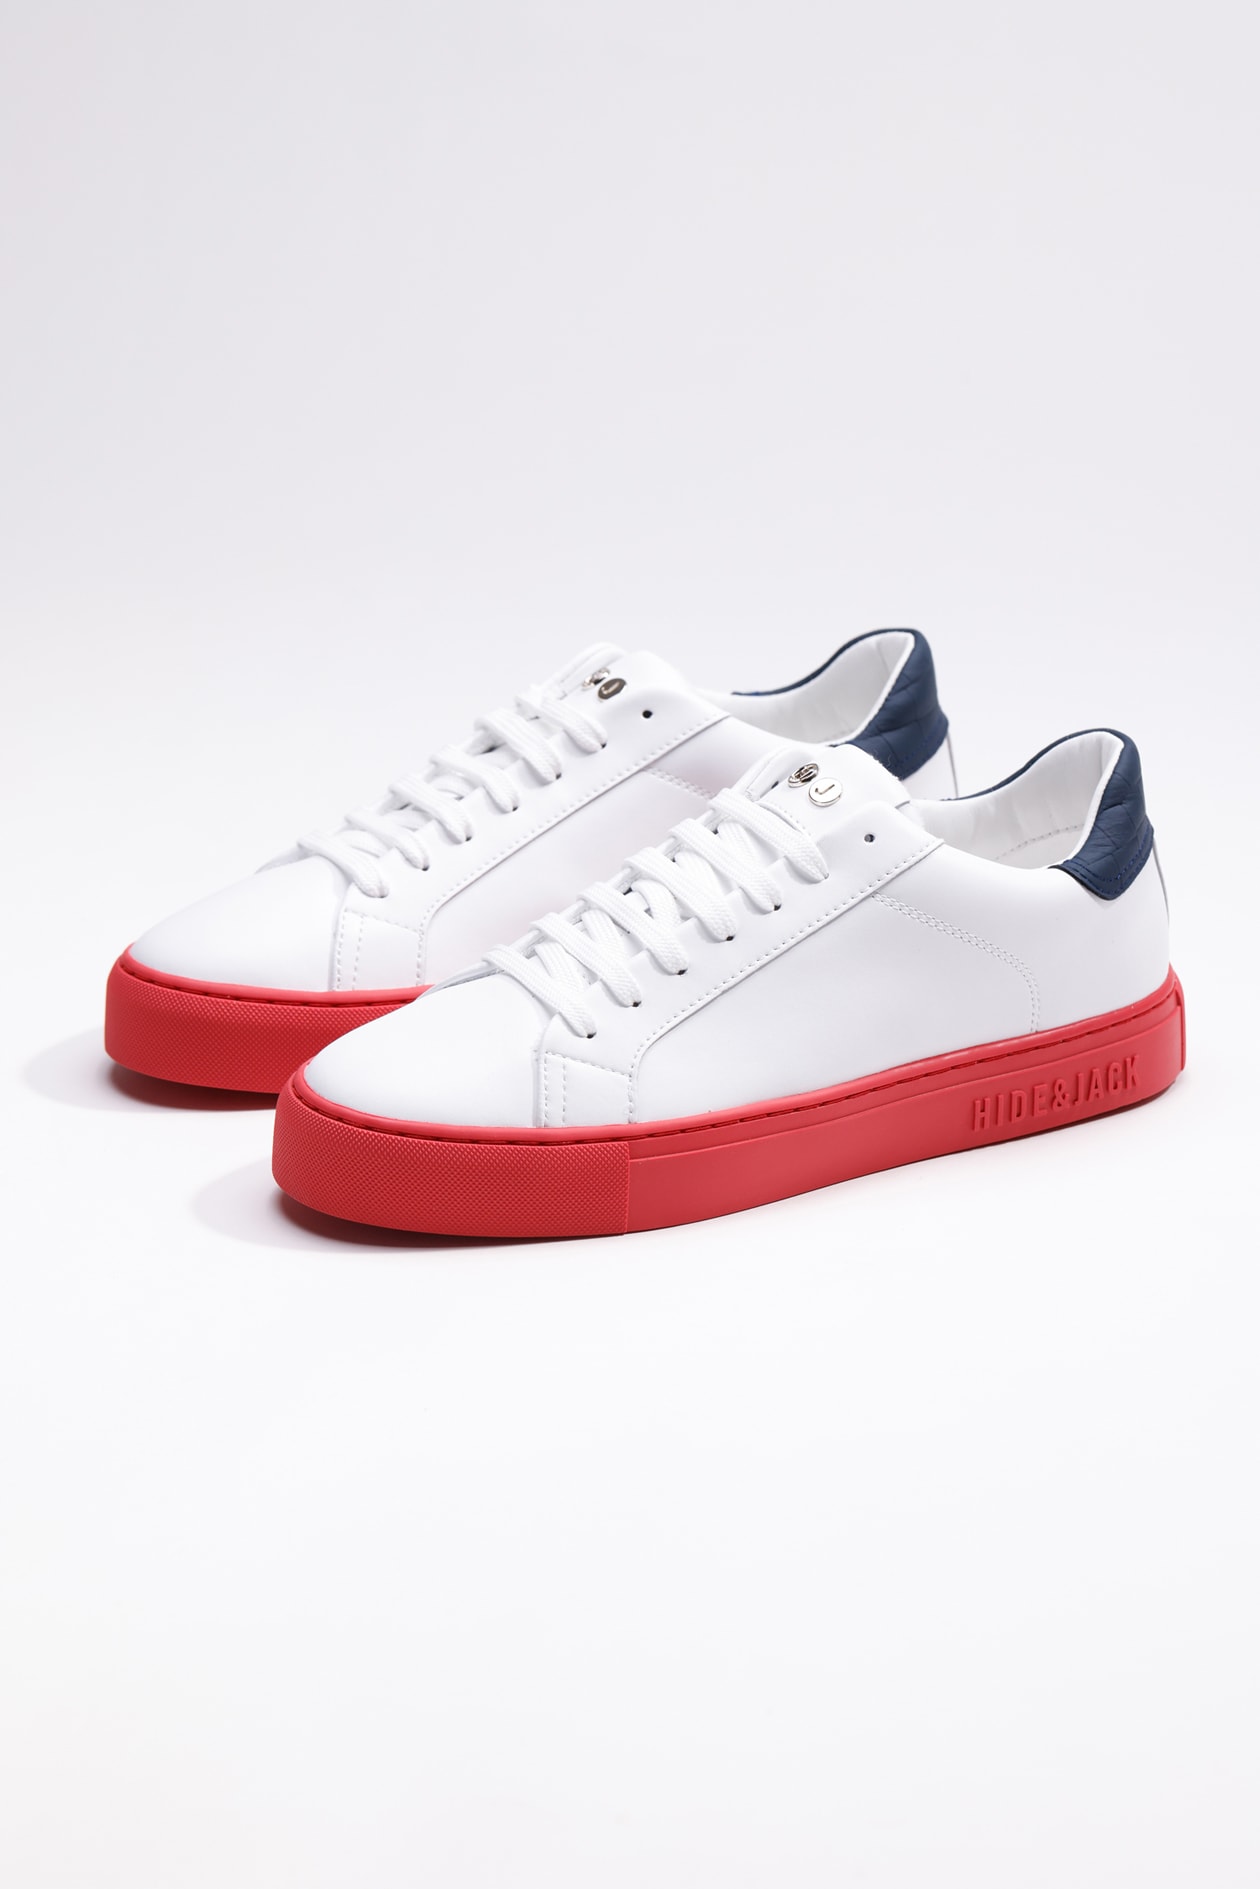 Hide & Jack Low Top Sneaker - Essence Sky Blue Red